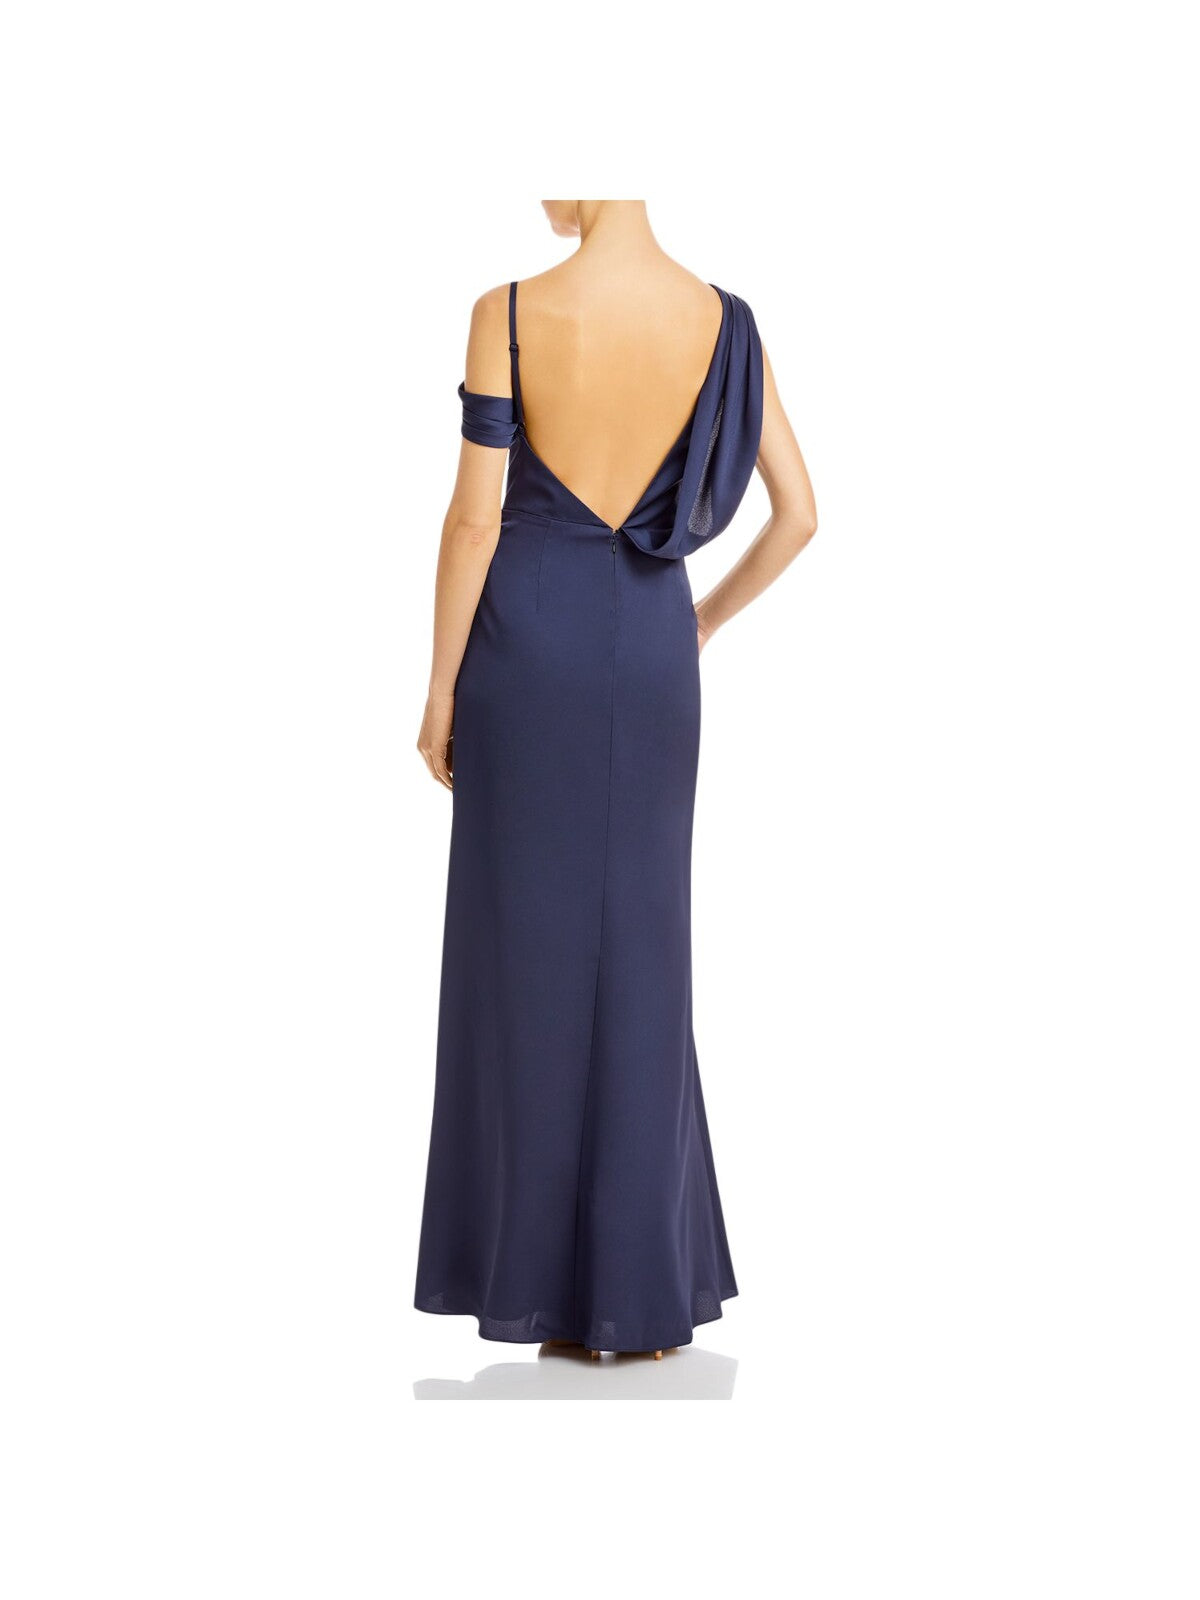 AQUA FORMAL Womens Navy Zippered Adjustable Lined Sleeveless Asymmetrical Neckline Full-Length Evening Gown Dress 6